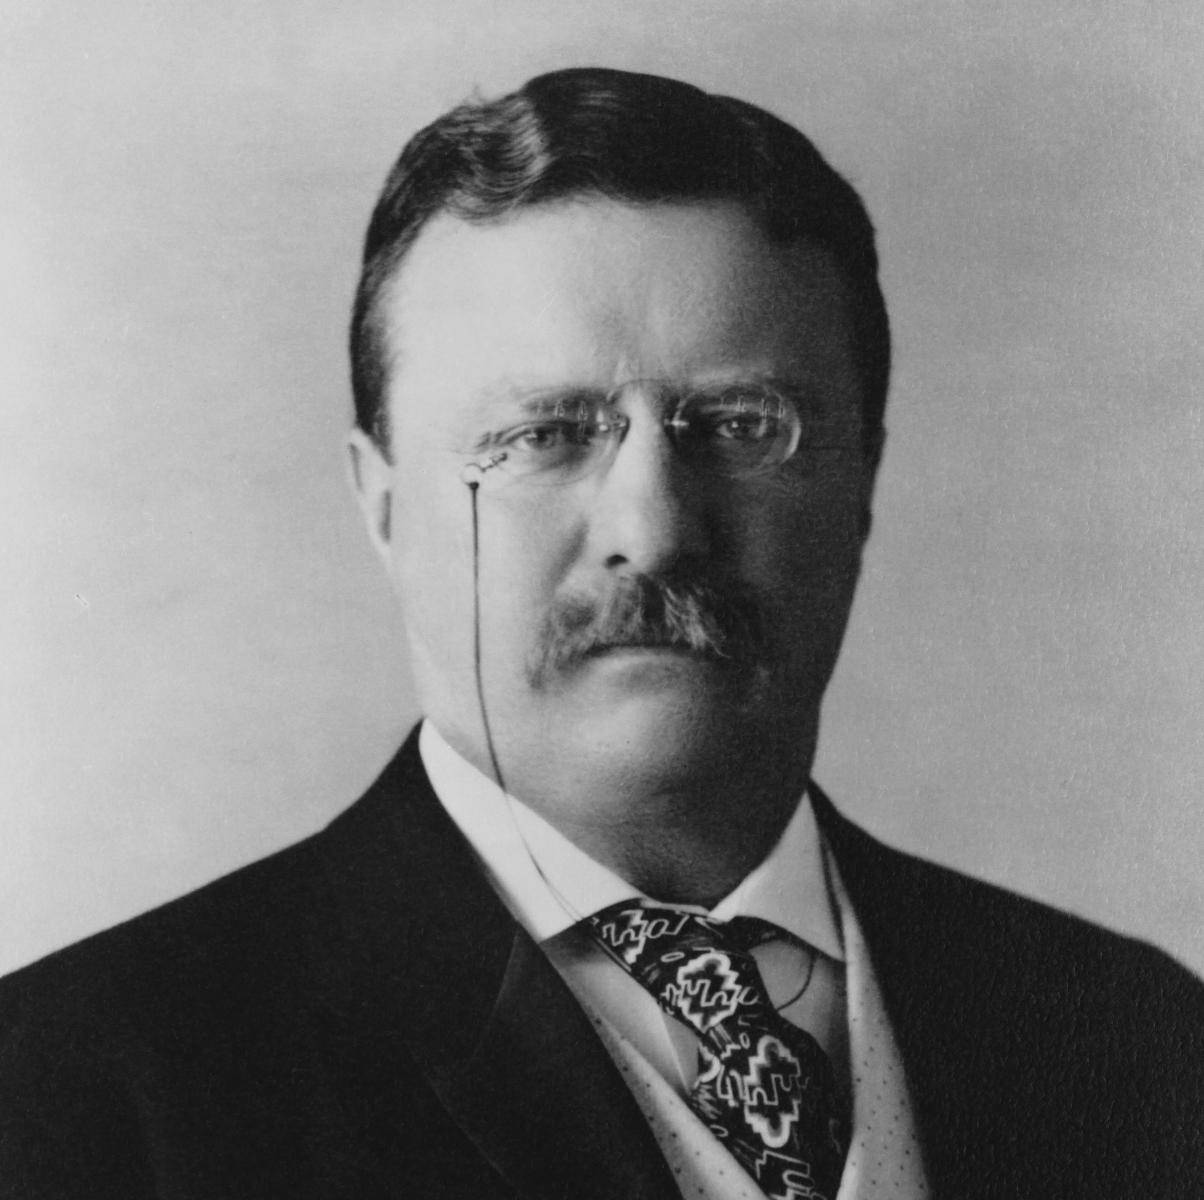 Theodore Roosevelt 